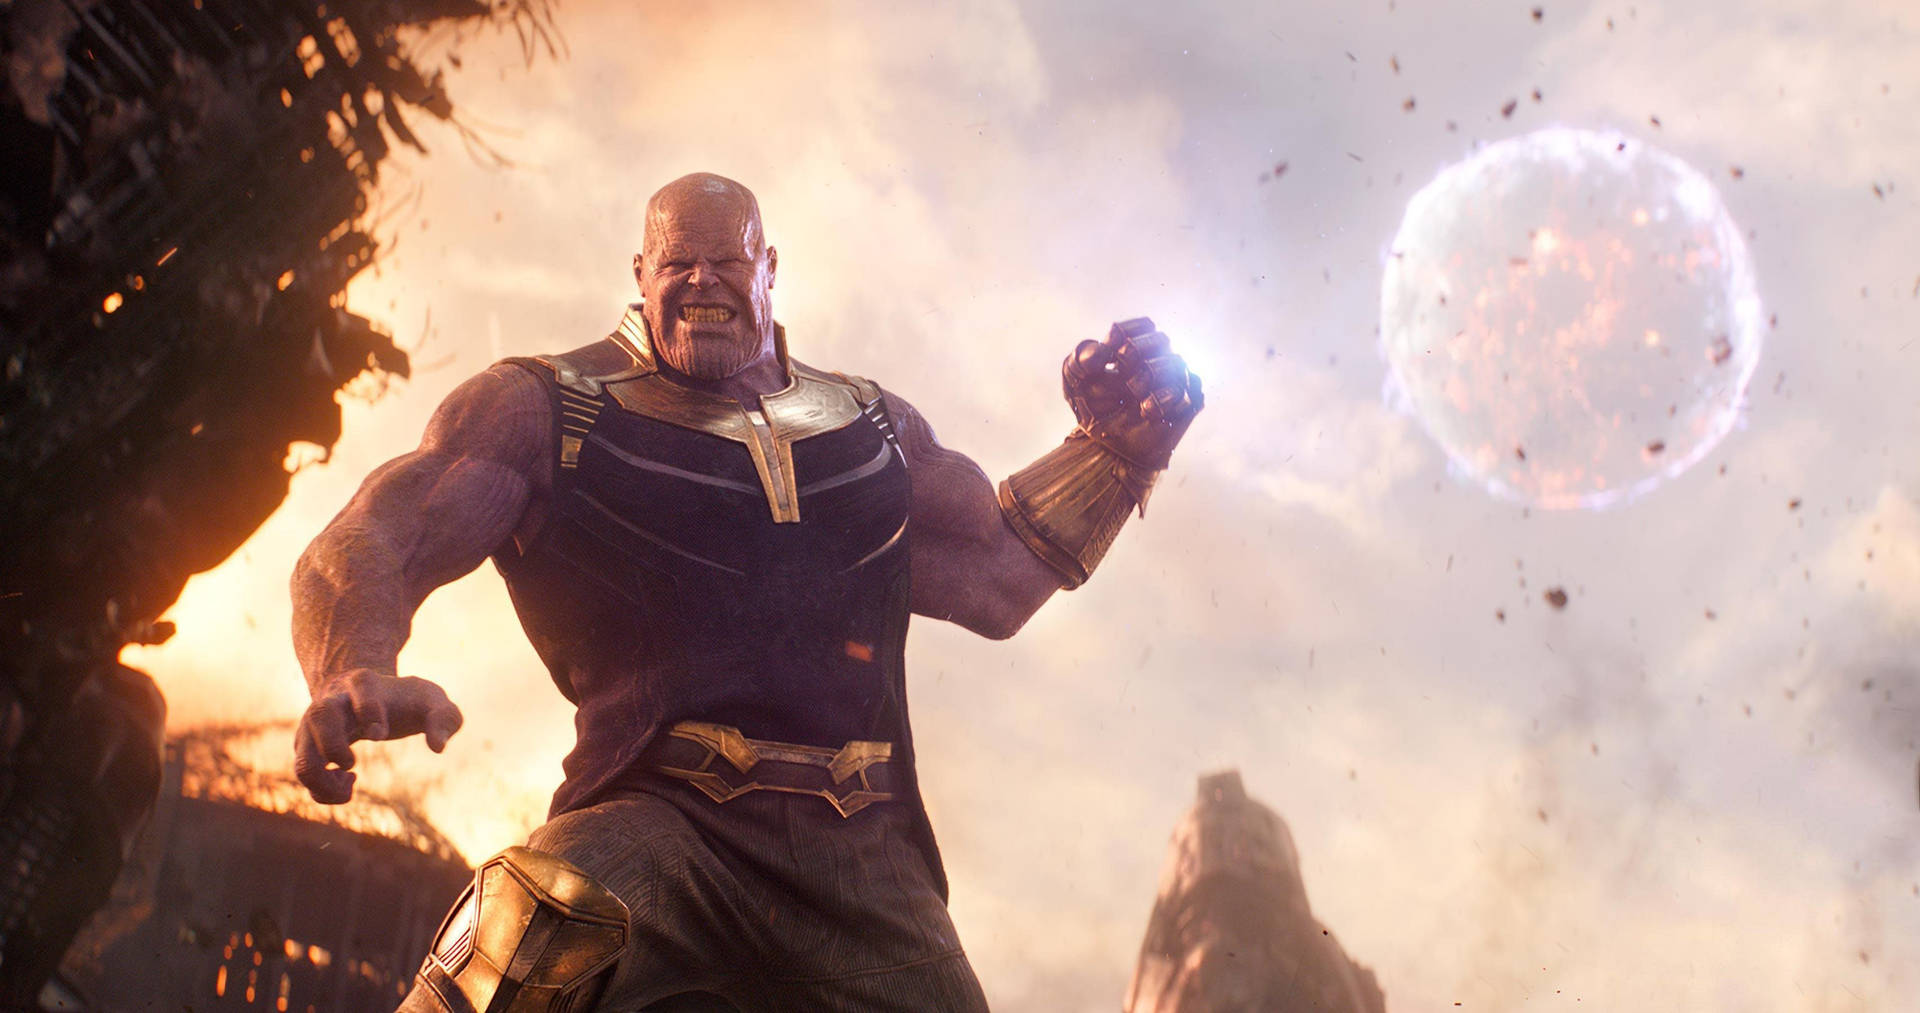 Top 999+ Avengers Infinity War Wallpaper Full HD, 4K✅Free to Use